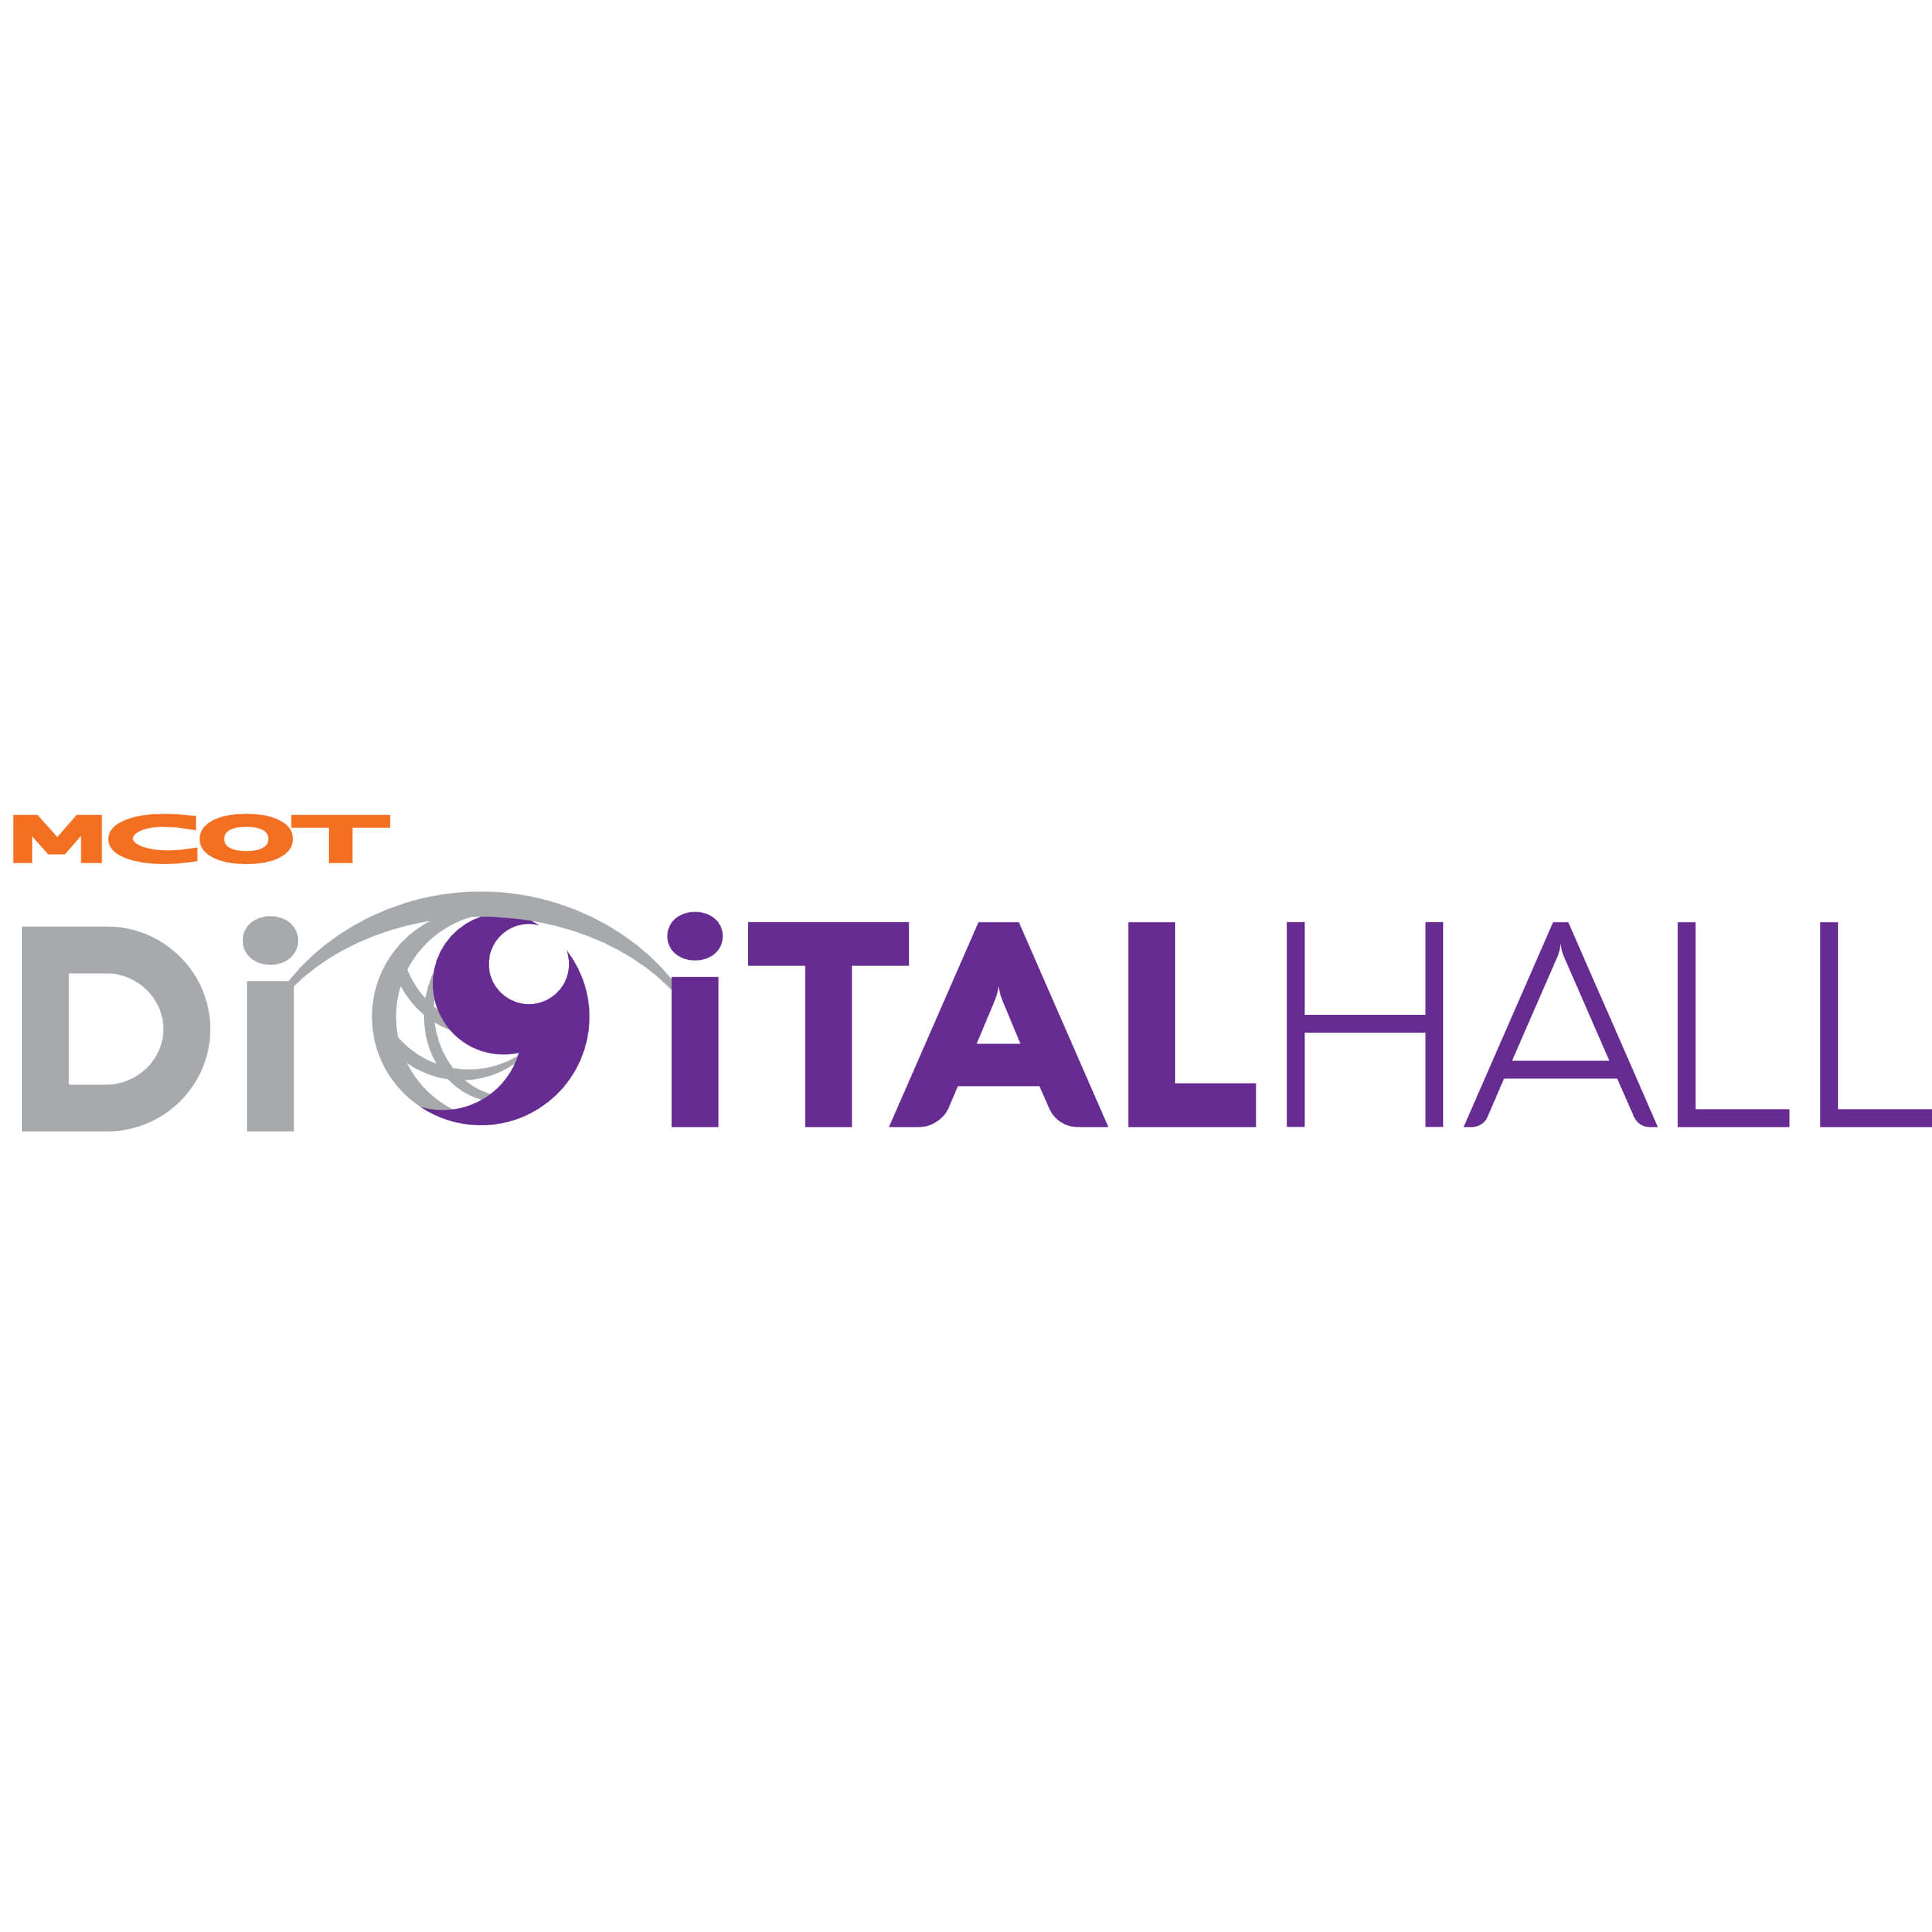 Digitalhall MCOT